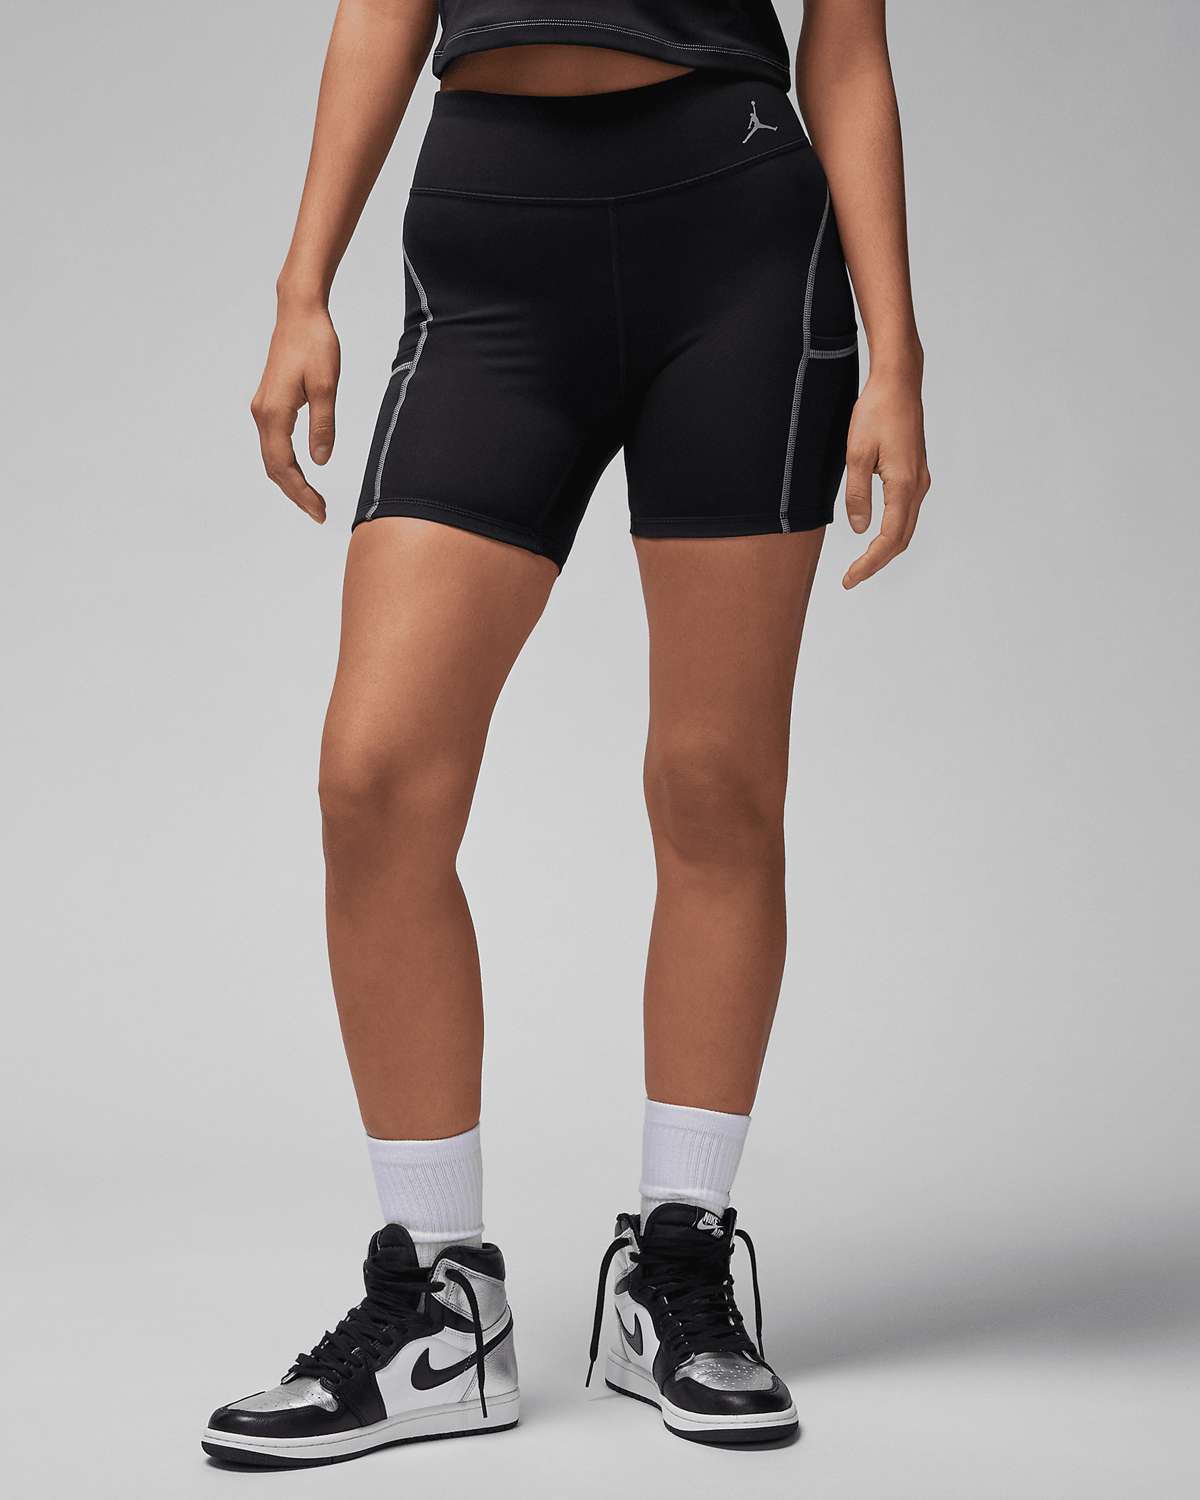 Jordan-Sport-Womens-Shorts-Black